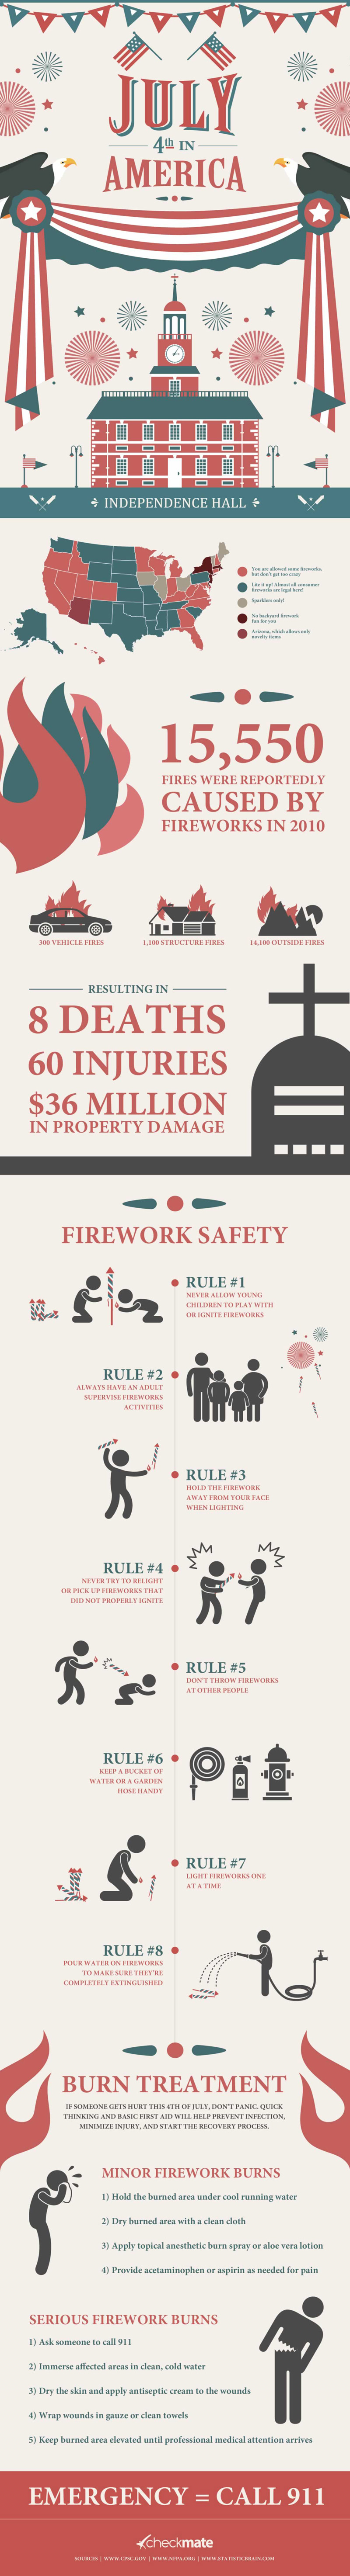 fireworks-101-4th-of-july-safety_51c9e7049cb42